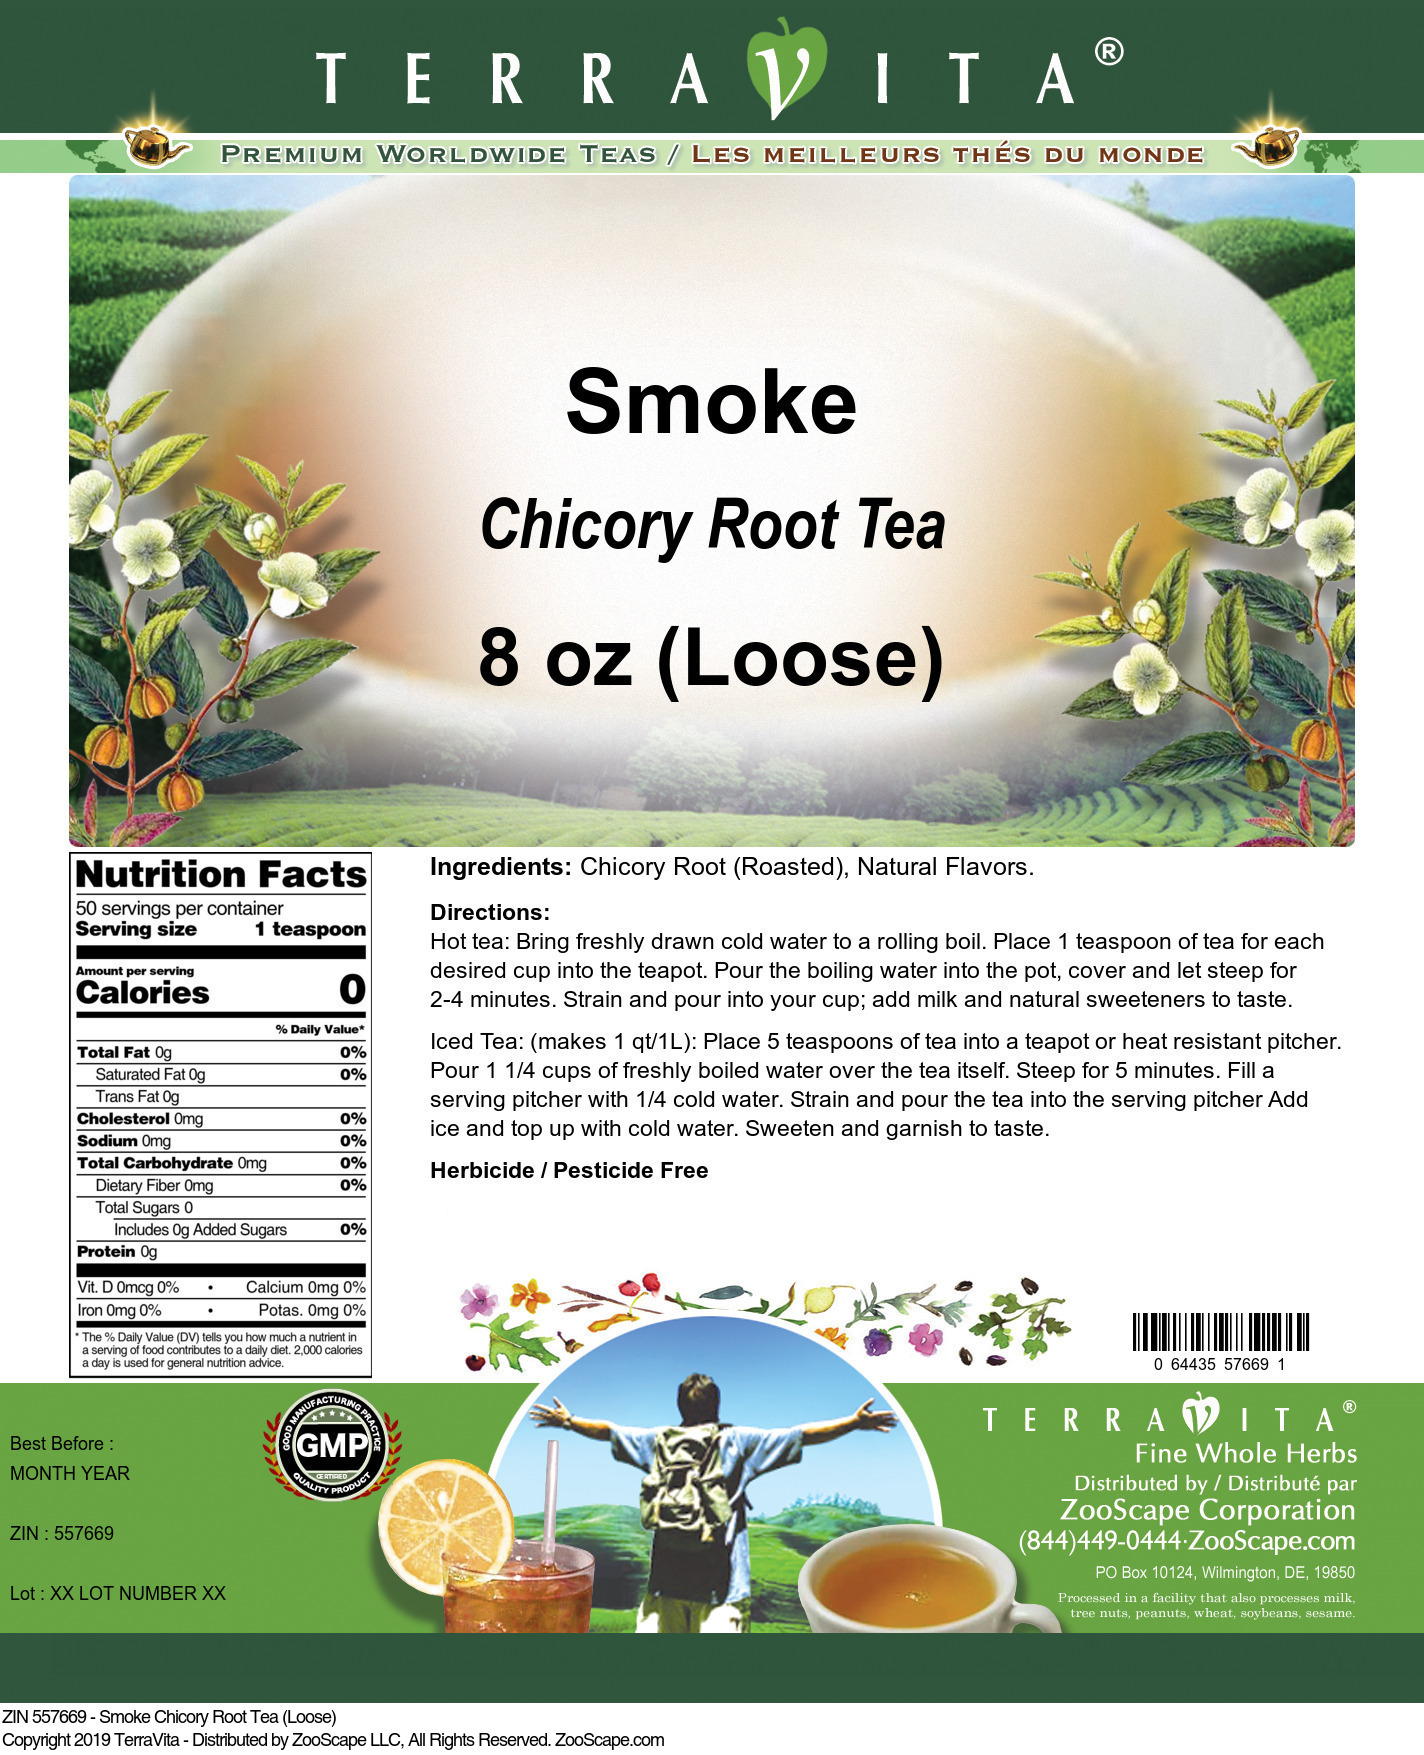 Smoke Chicory Root Tea (Loose) - Label